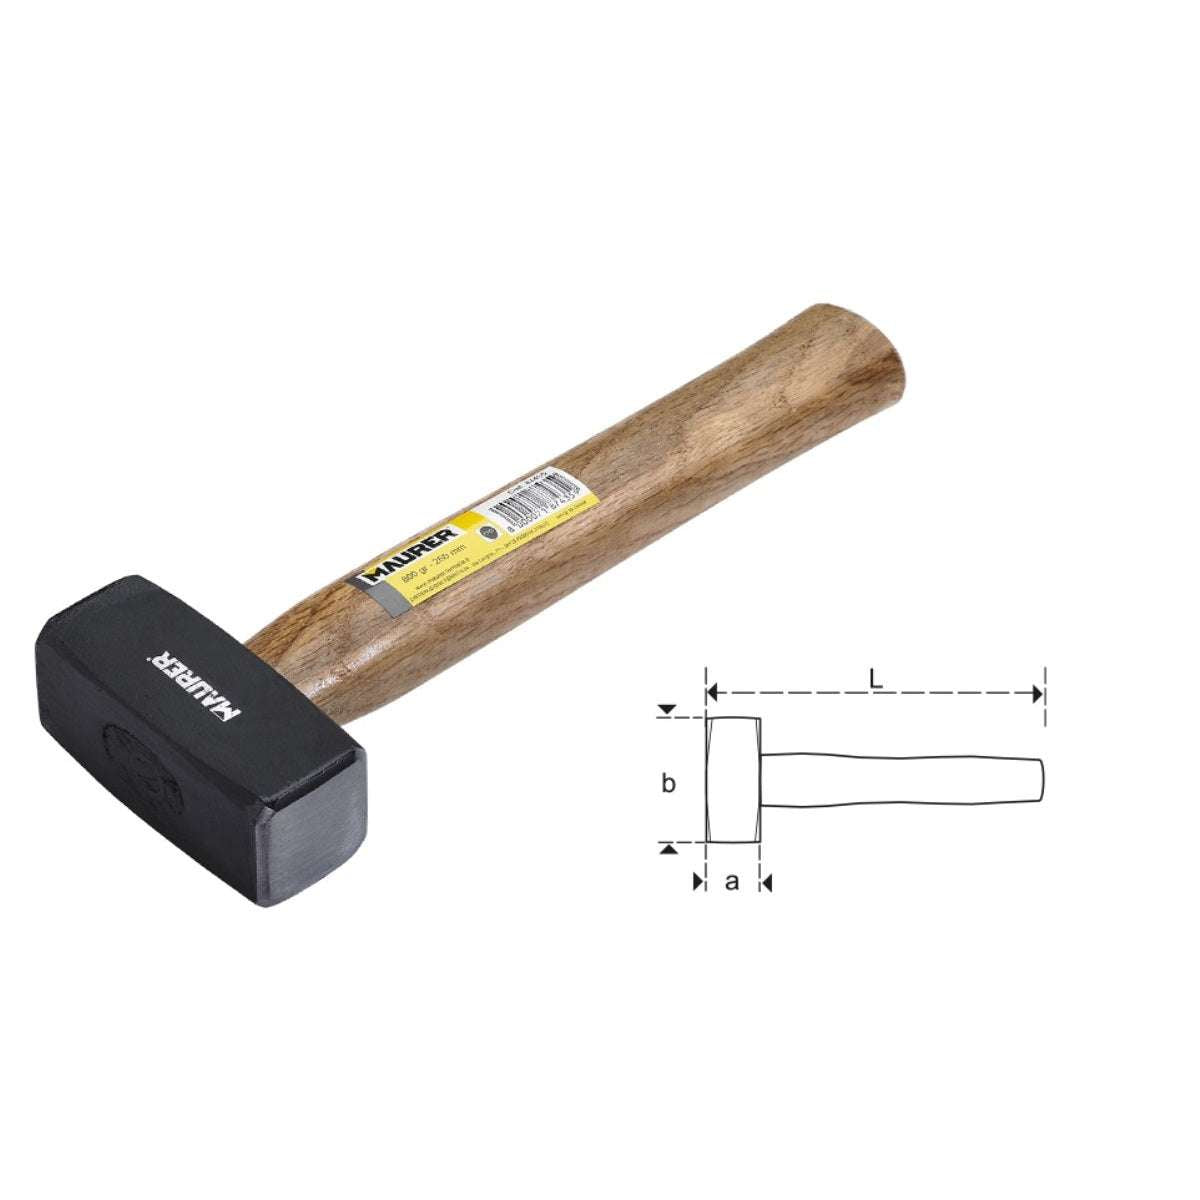 Masonry mallets wooden handle 1000g - Maurer